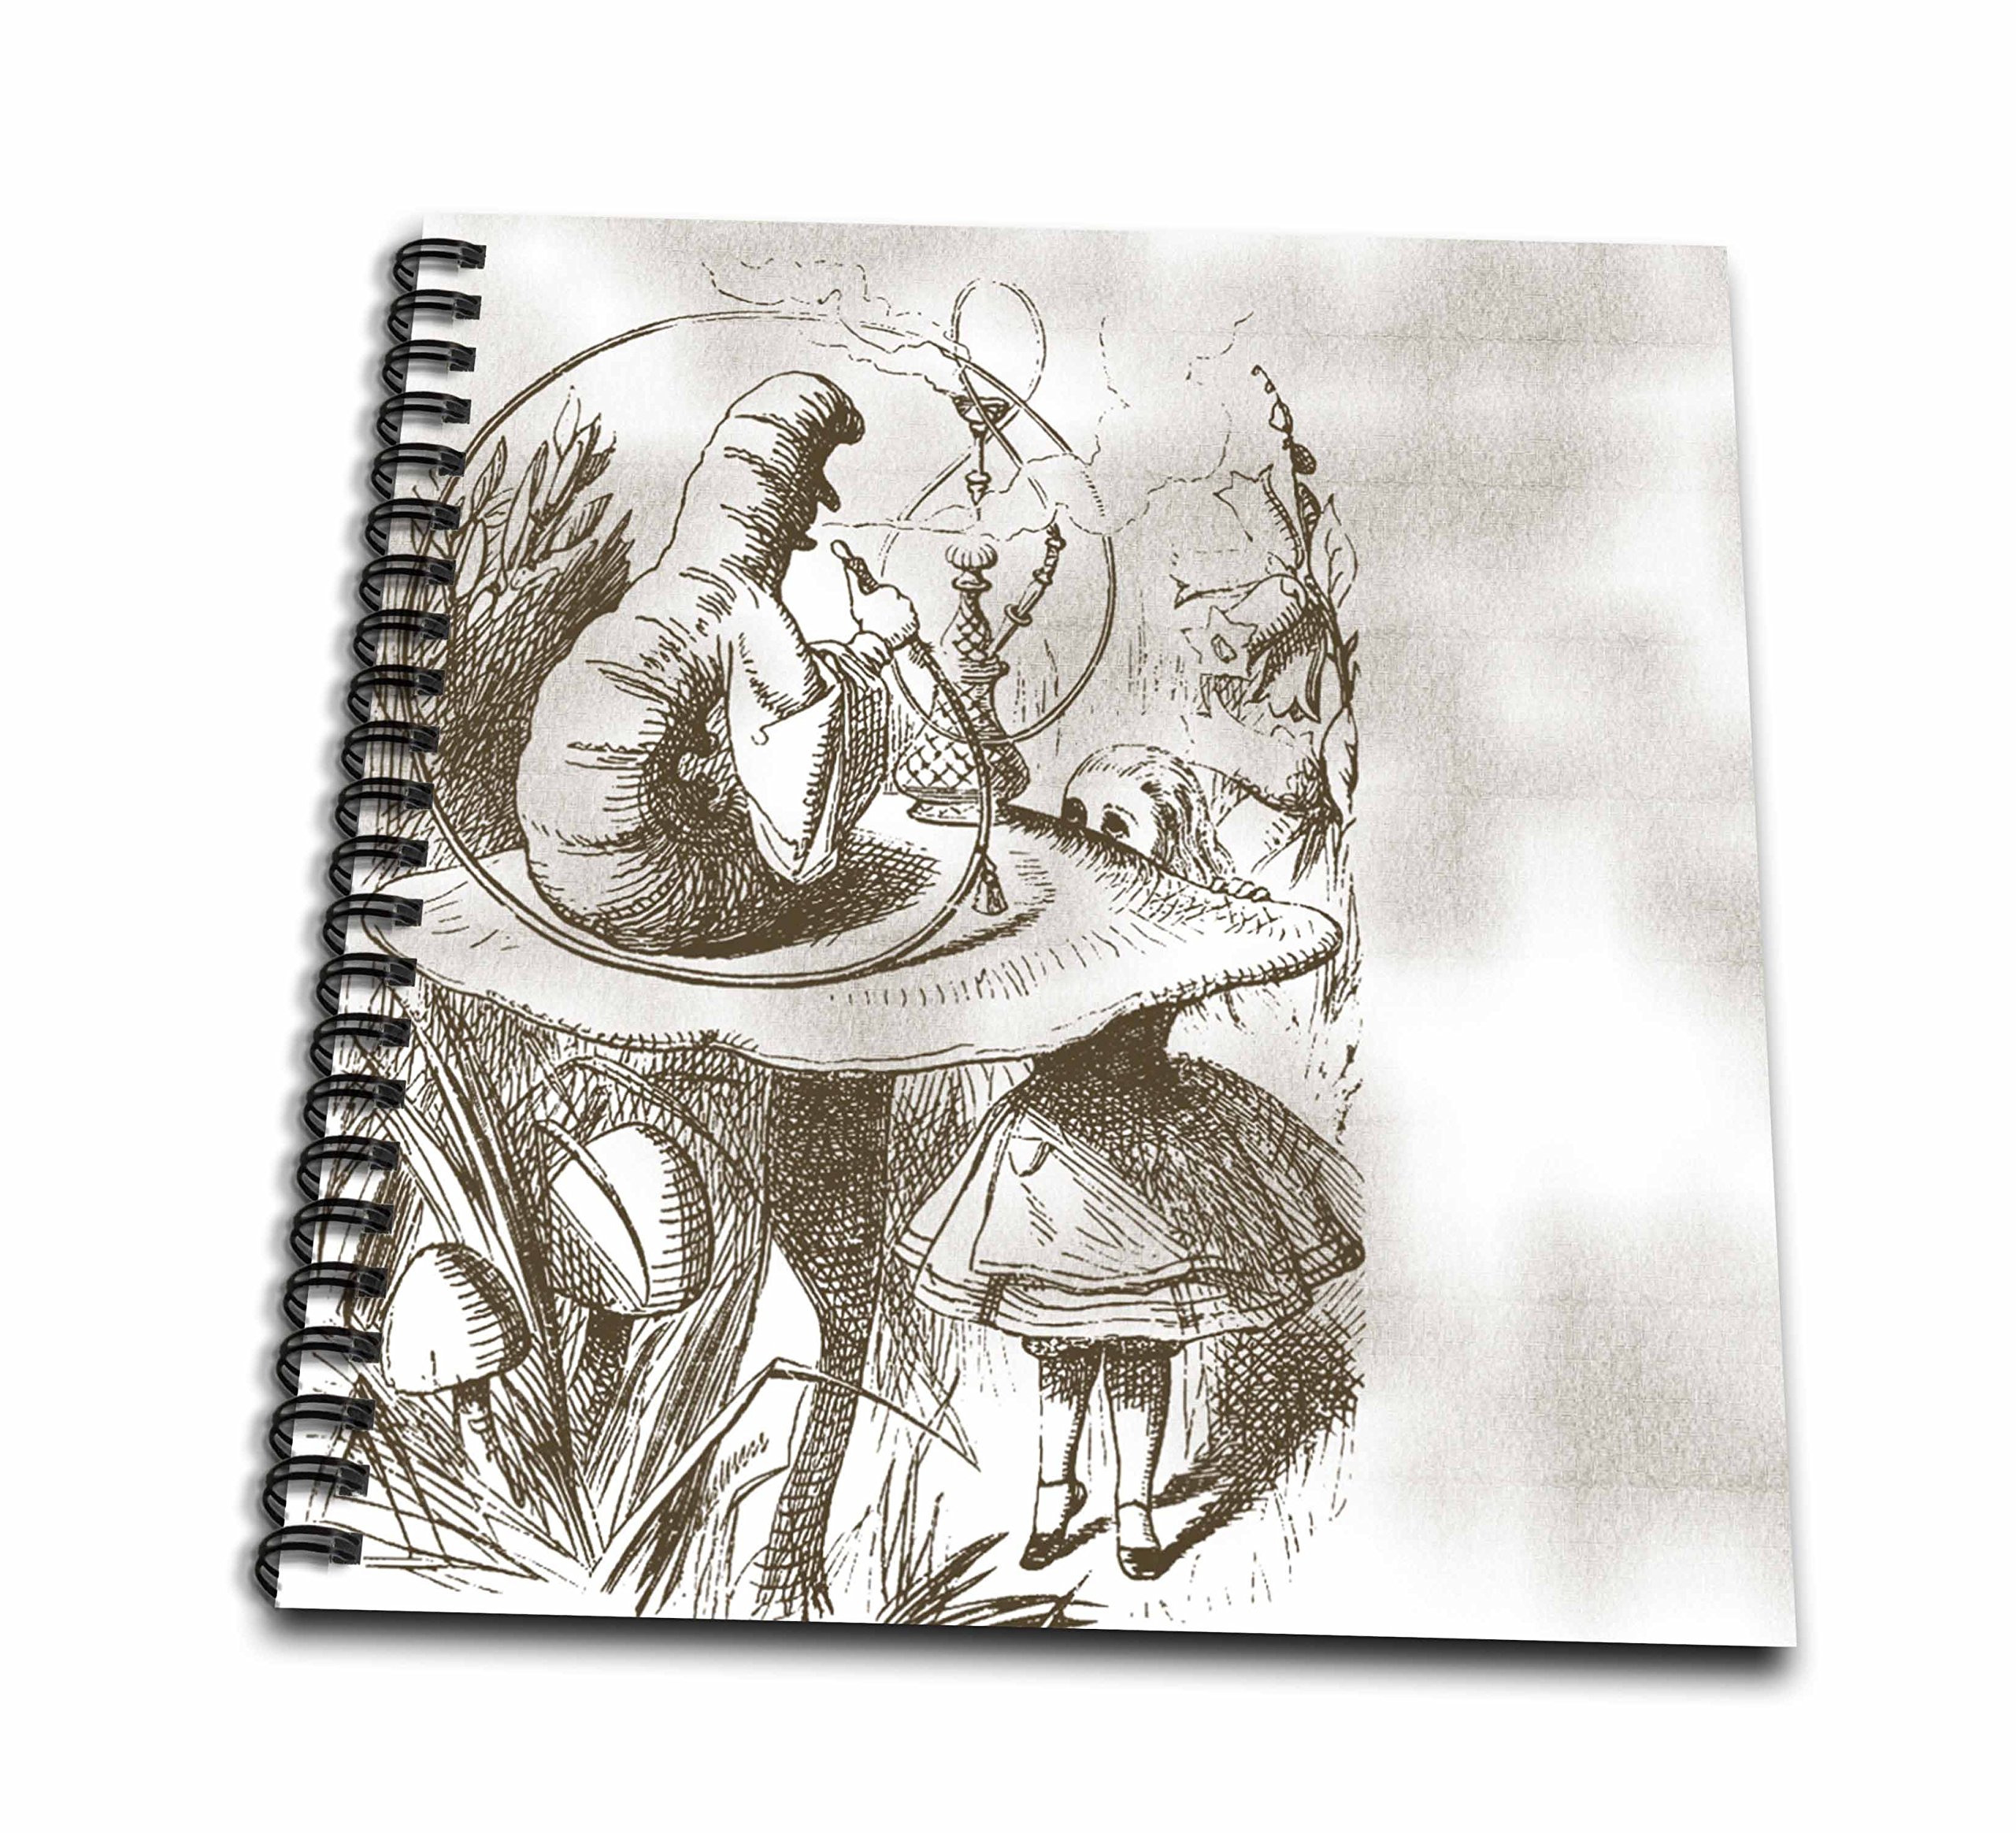 3dRose LLC db_110199_2 Memory Book, 12 by 12-Inch, Caterpillar on Mushroom Vintage Alice in Wonderland